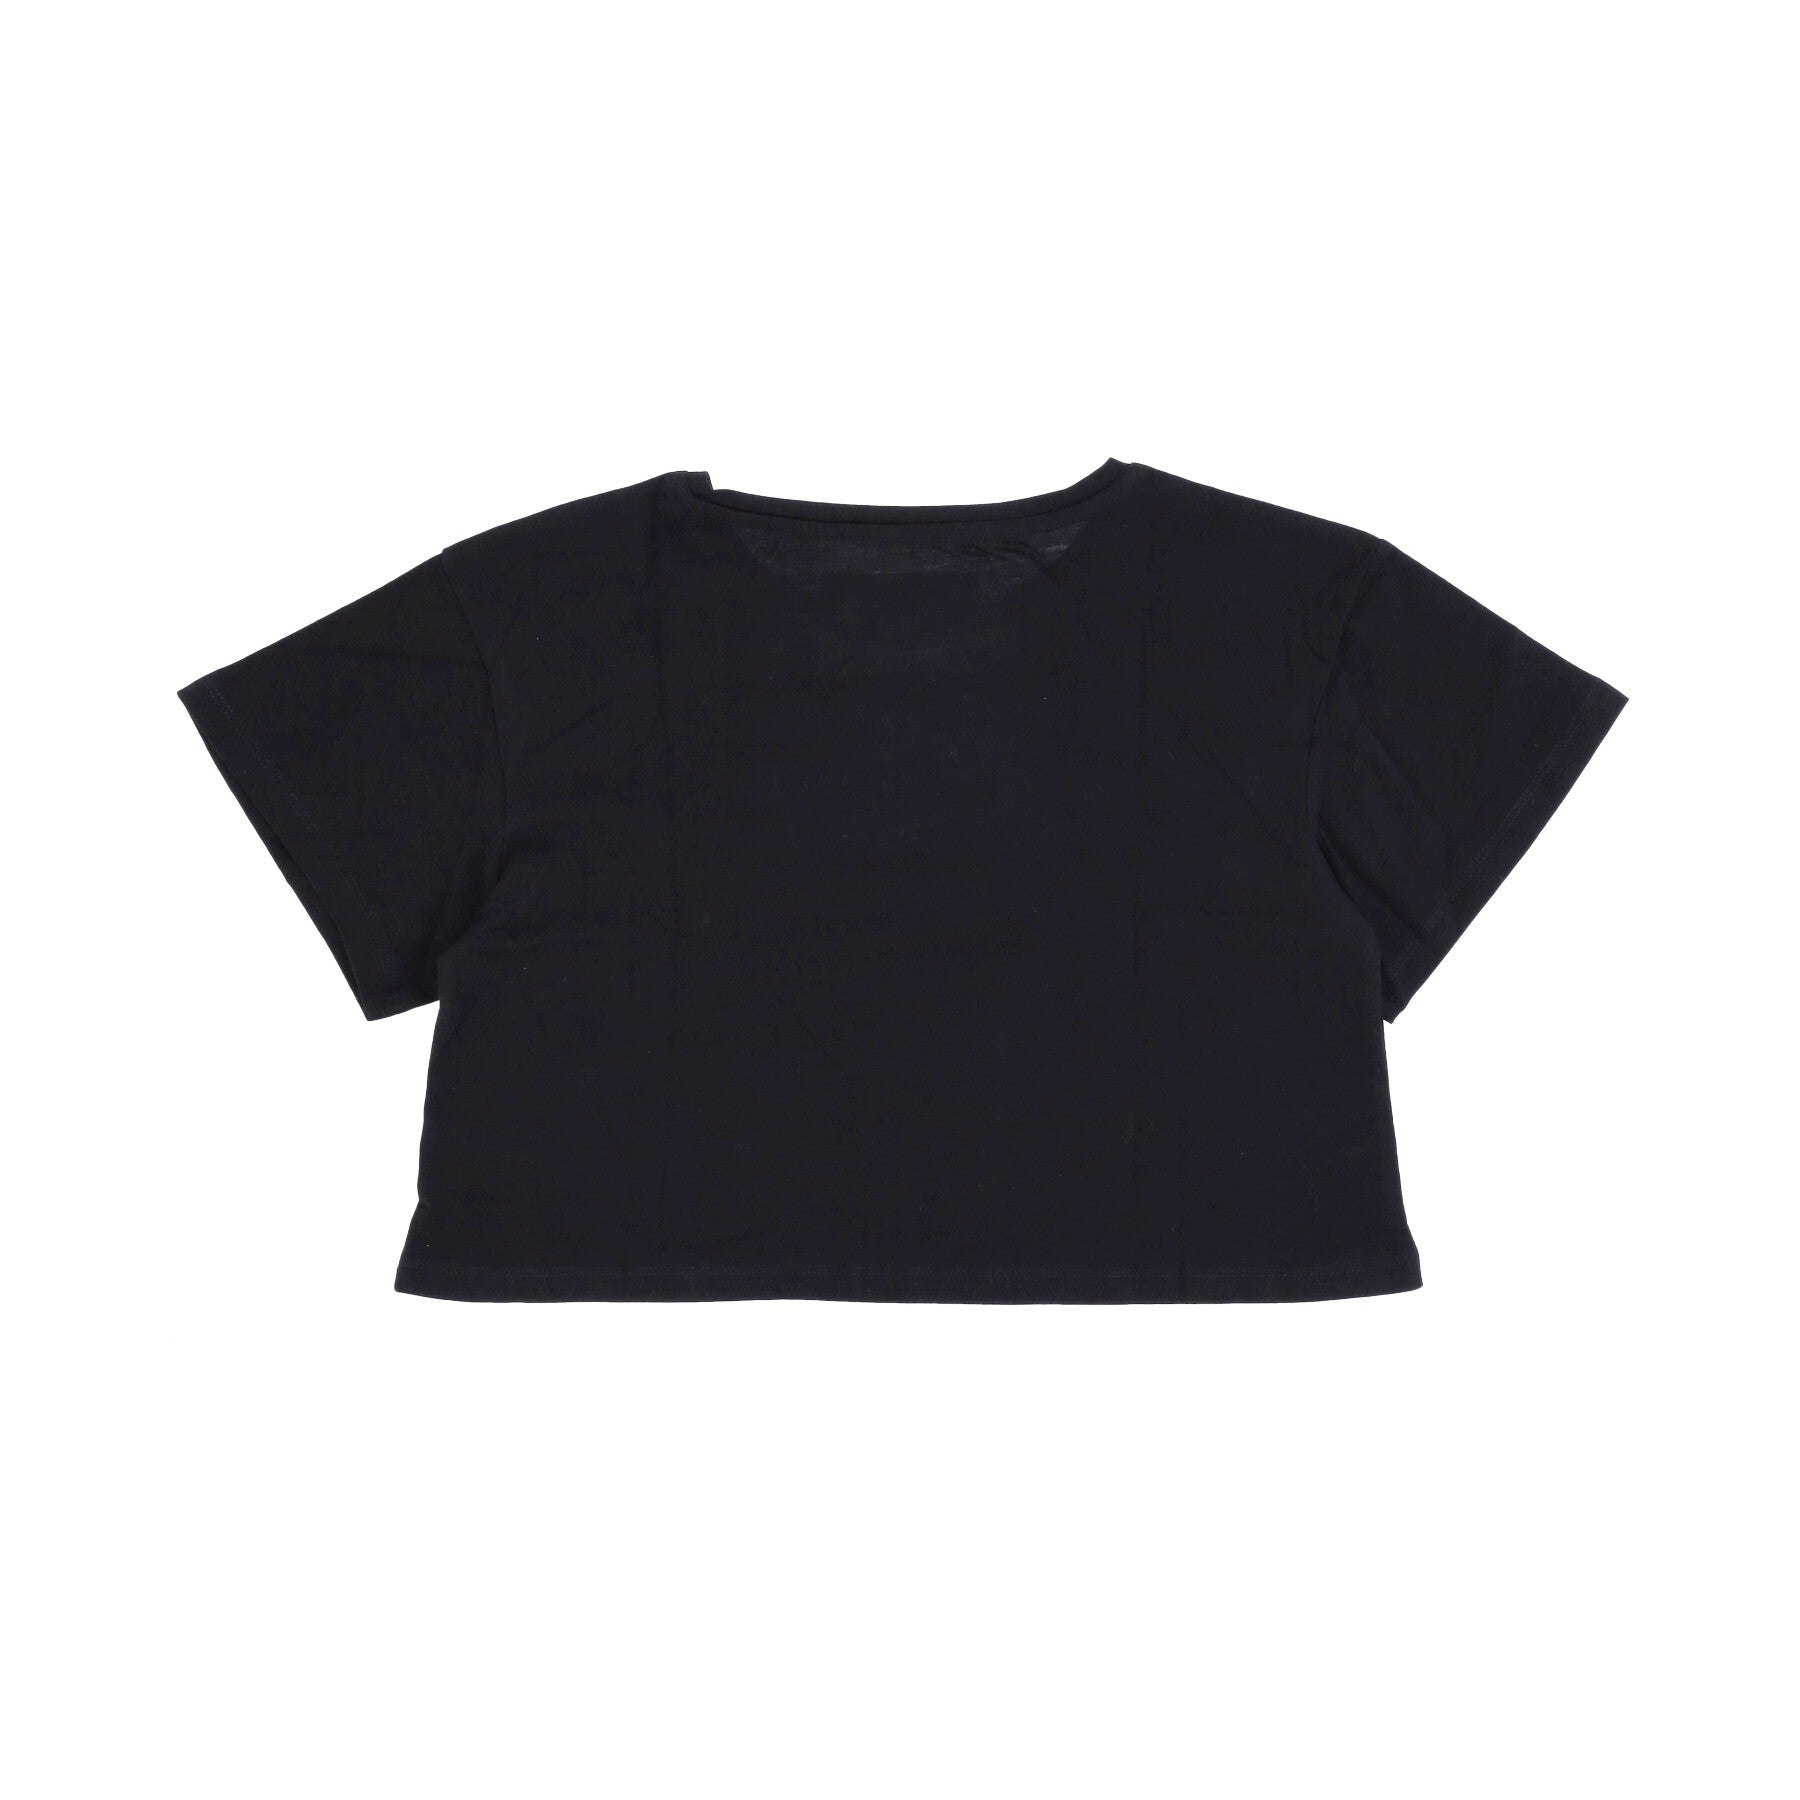 Donatella 01 Women's Short T-Shirt